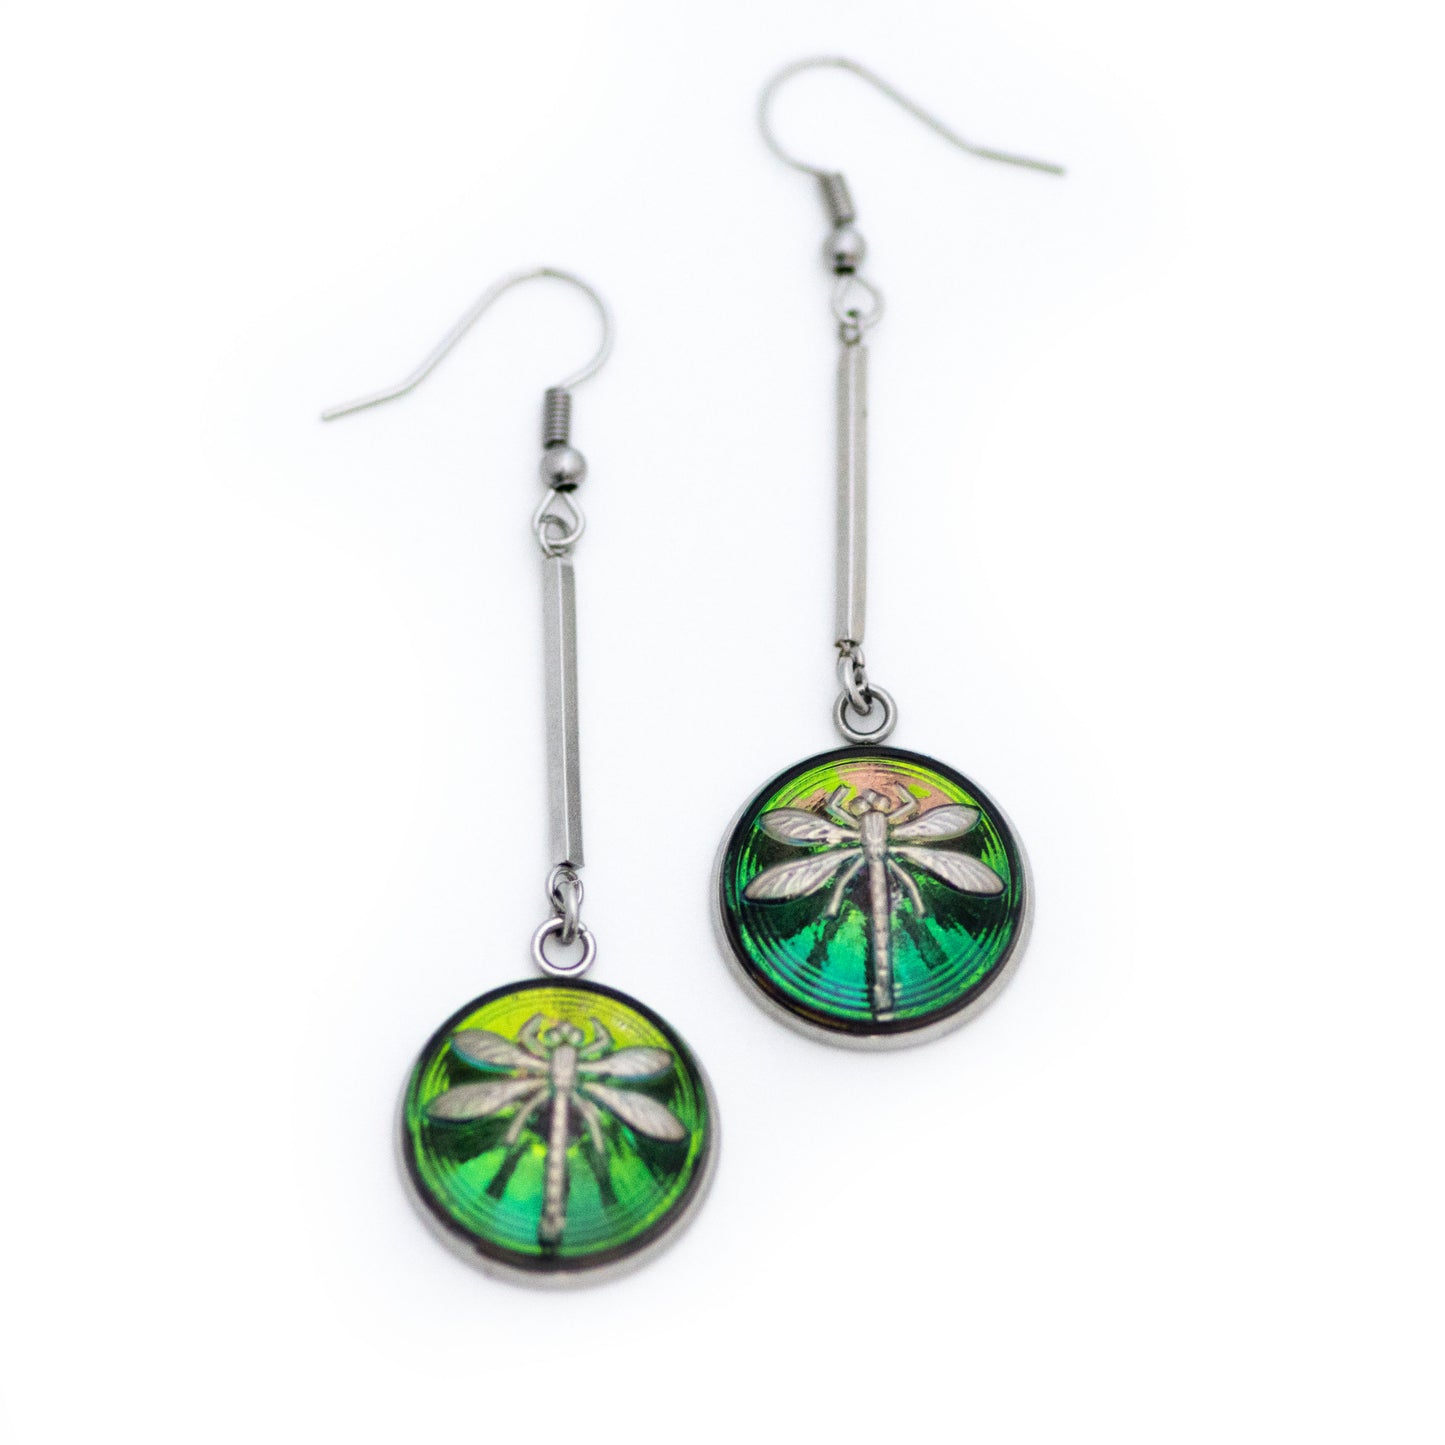 Green and platinum painted Czech glass buttons drop dangle earrings.